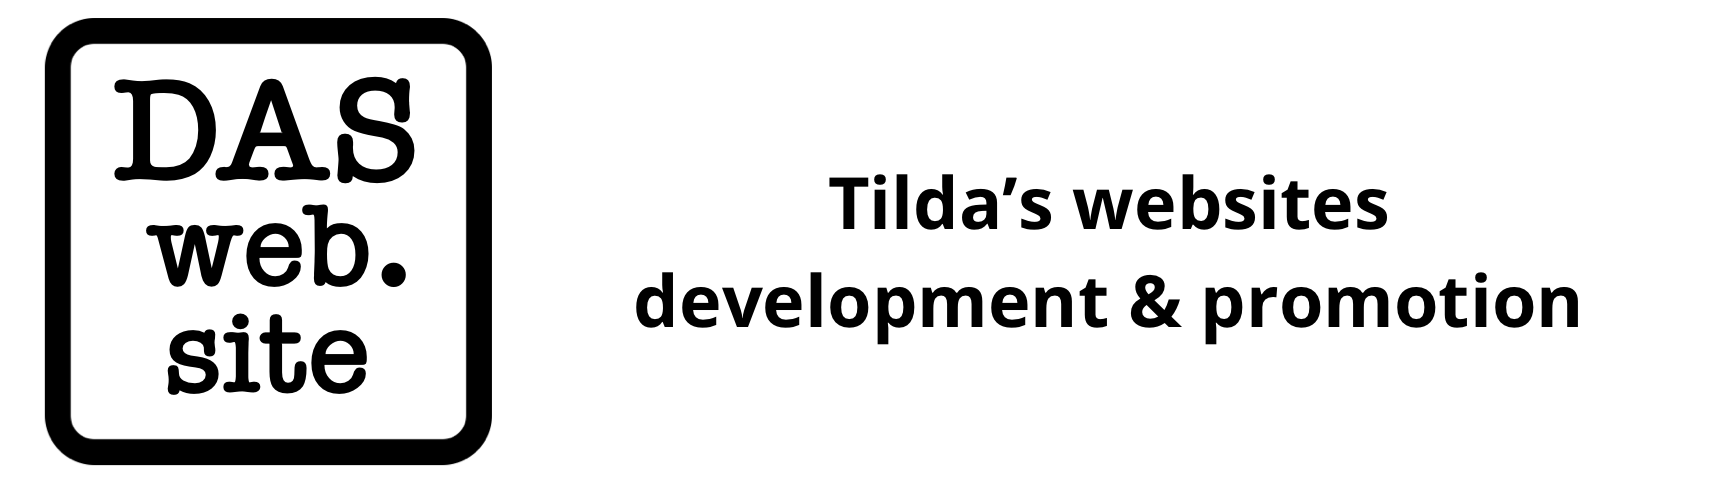 DASweb Tilda's websites development &amp; promotion 